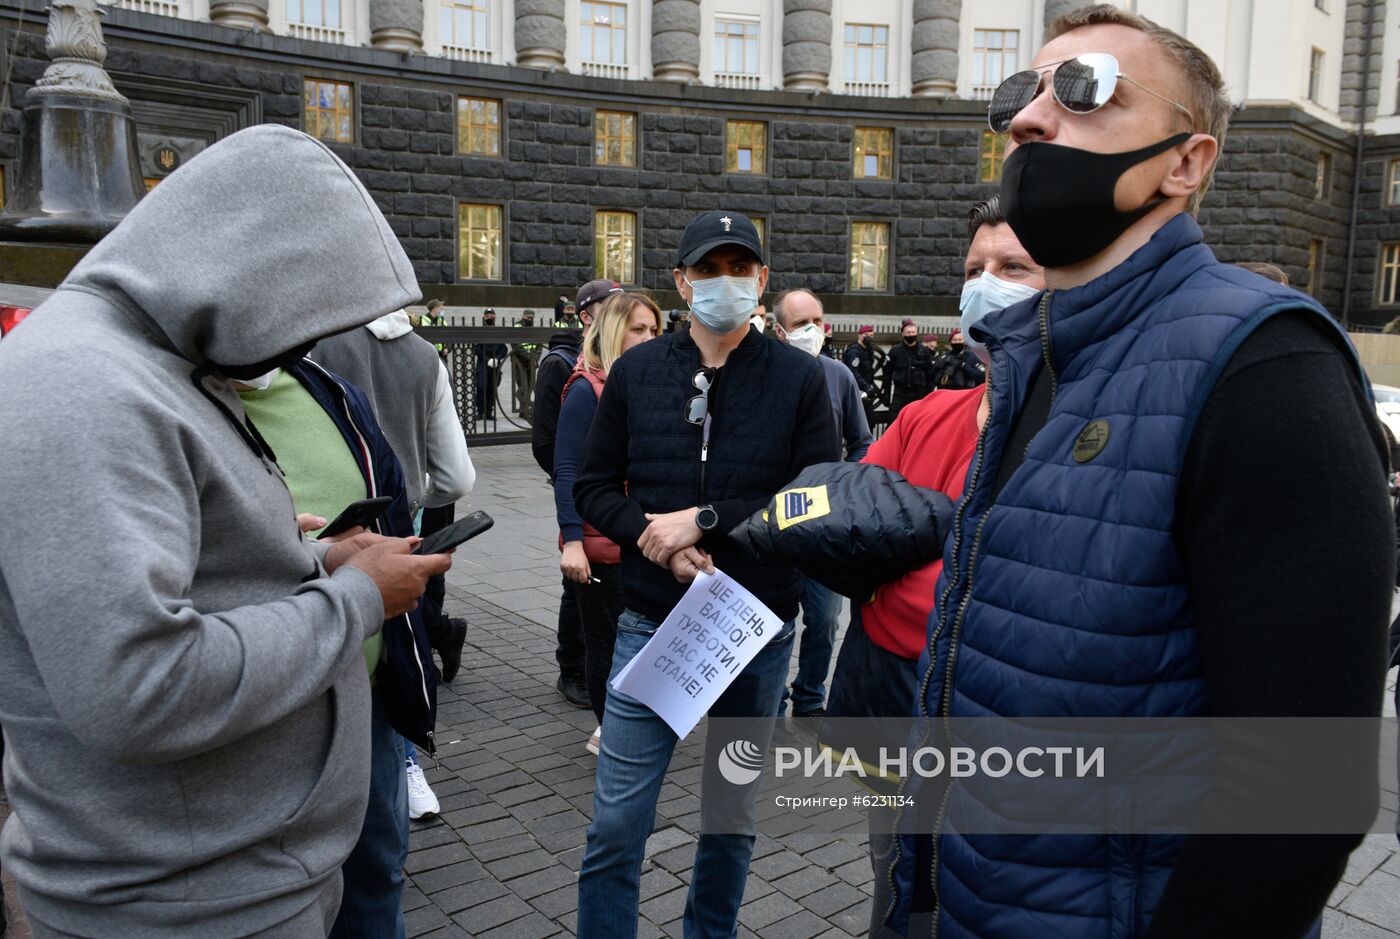 Акция с требованием прекращения карантина в Киеве